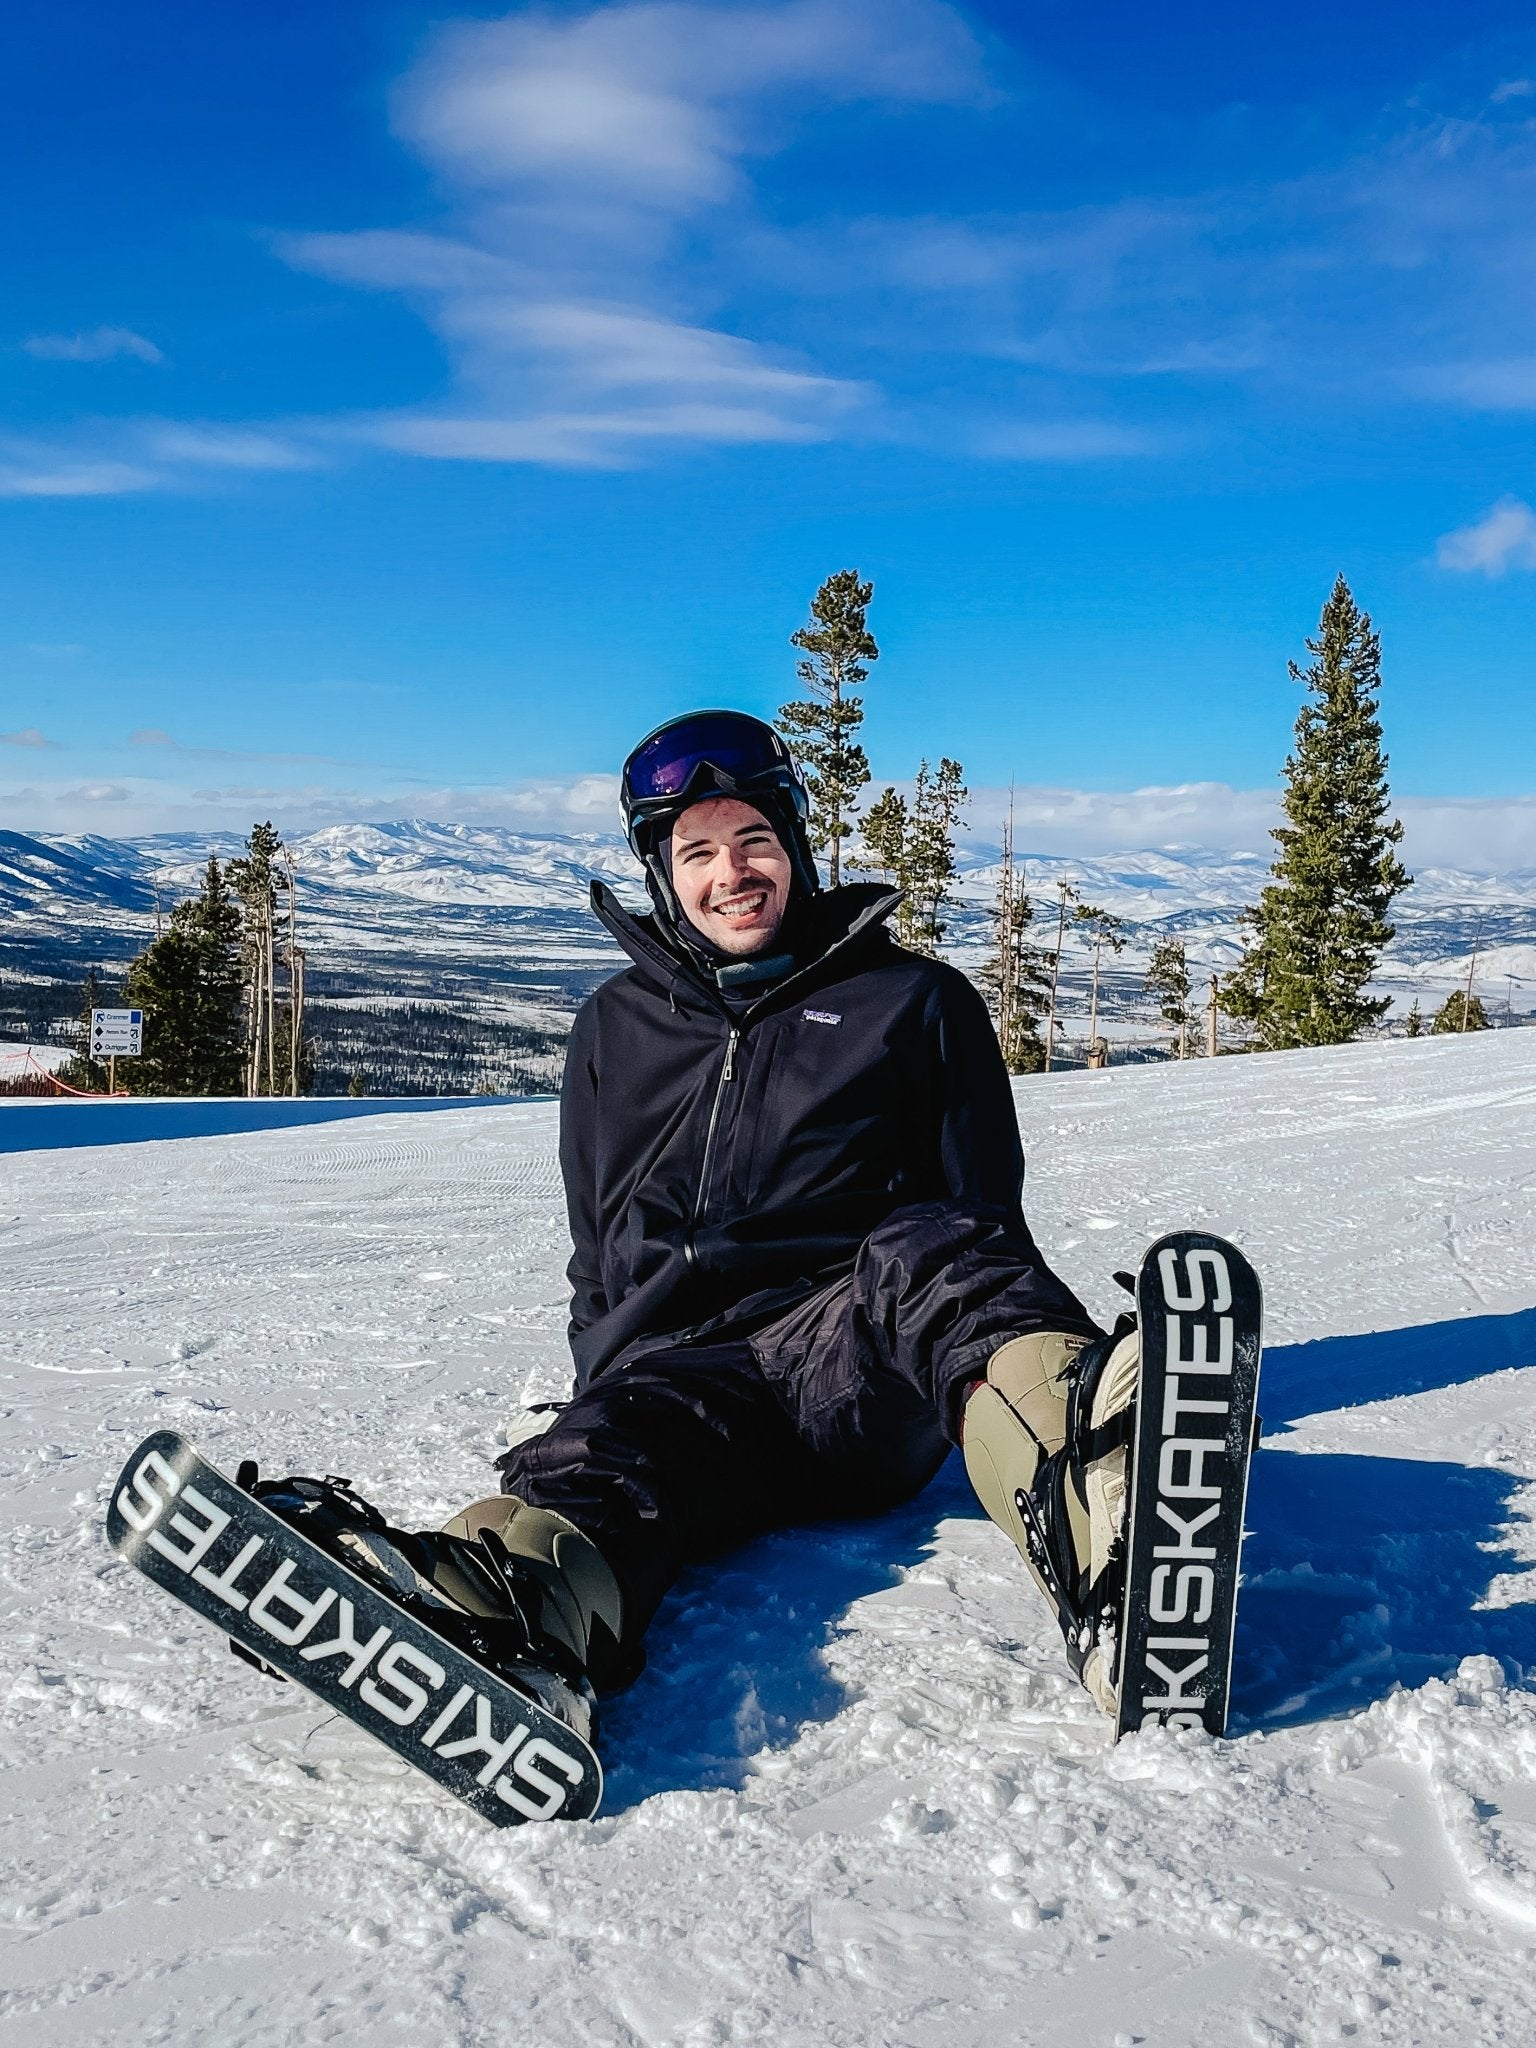 Does Ski Length Really Matter? - snowfeet*